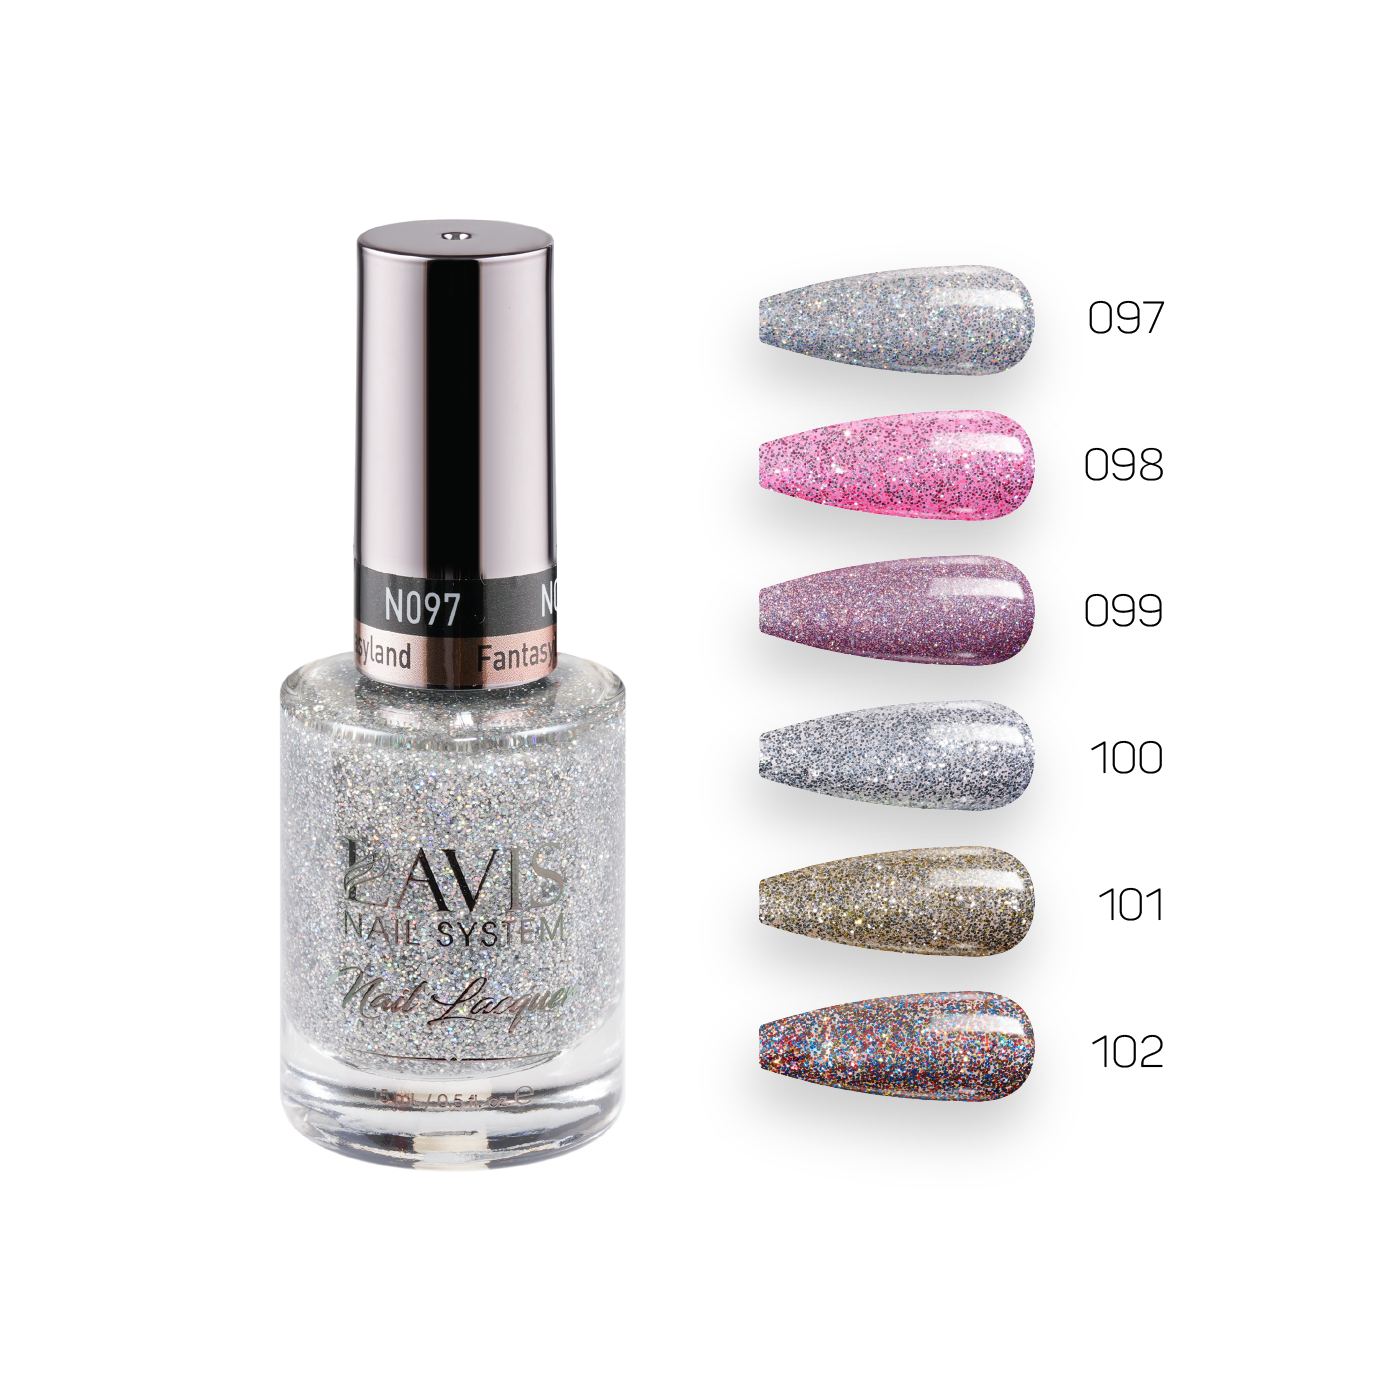 Lavis Healthy Nail Lacquer Holiday Fall Set N2 (6 colors) : 097, 098, 099, 100, 101, 102